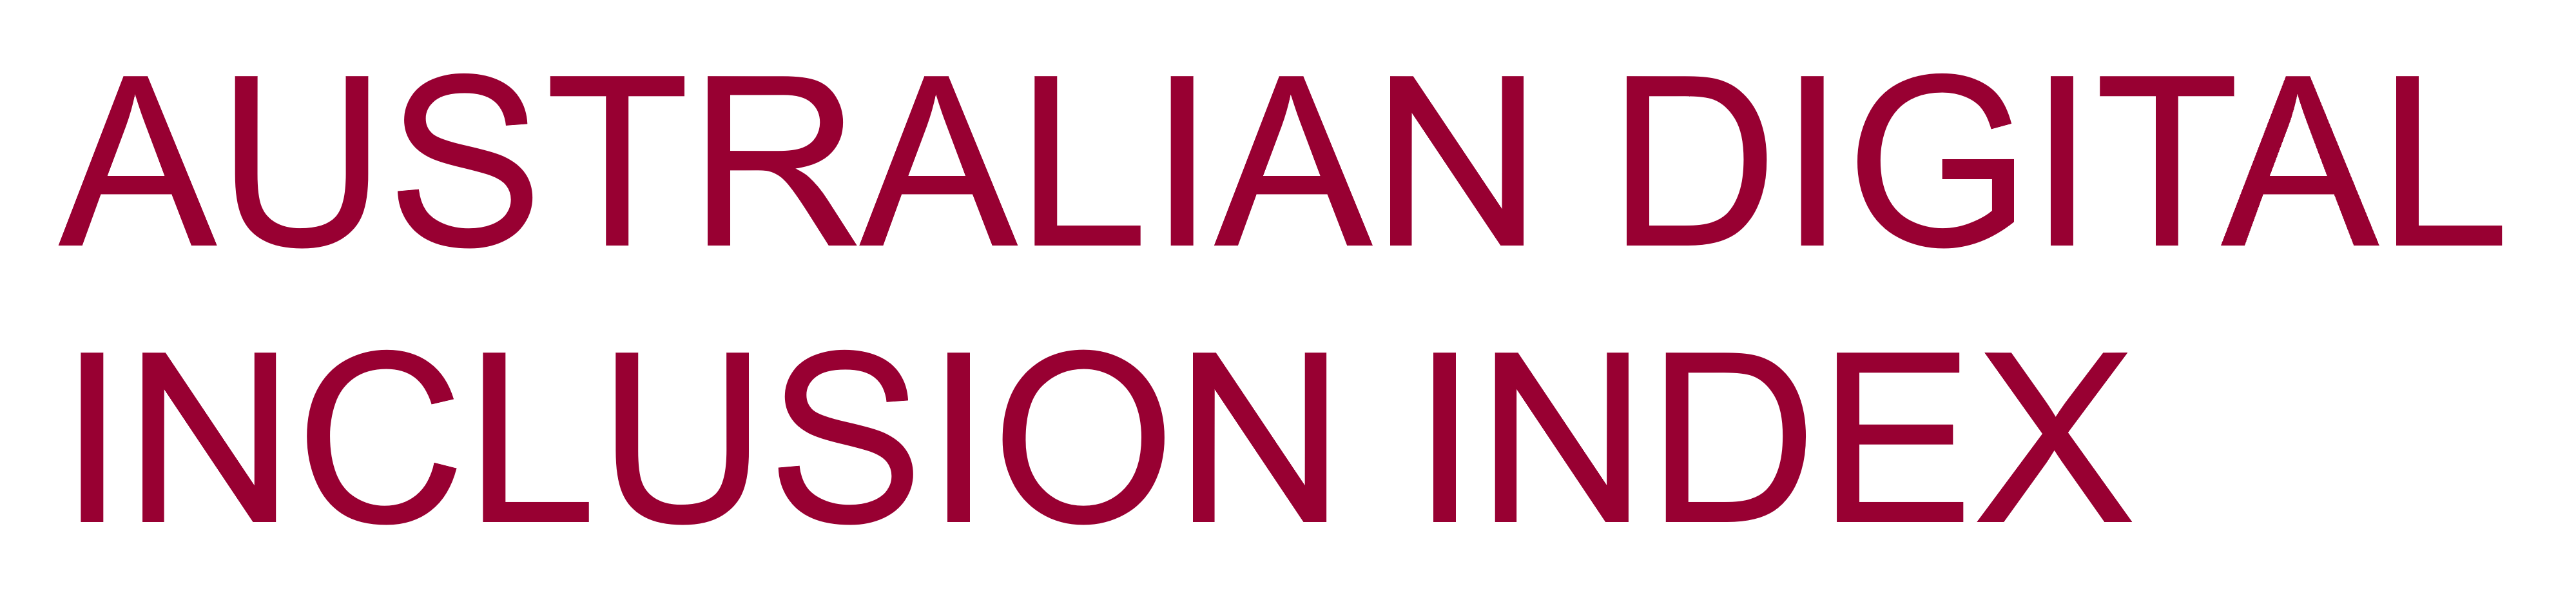 Australian Digital Inclusion Index Logo